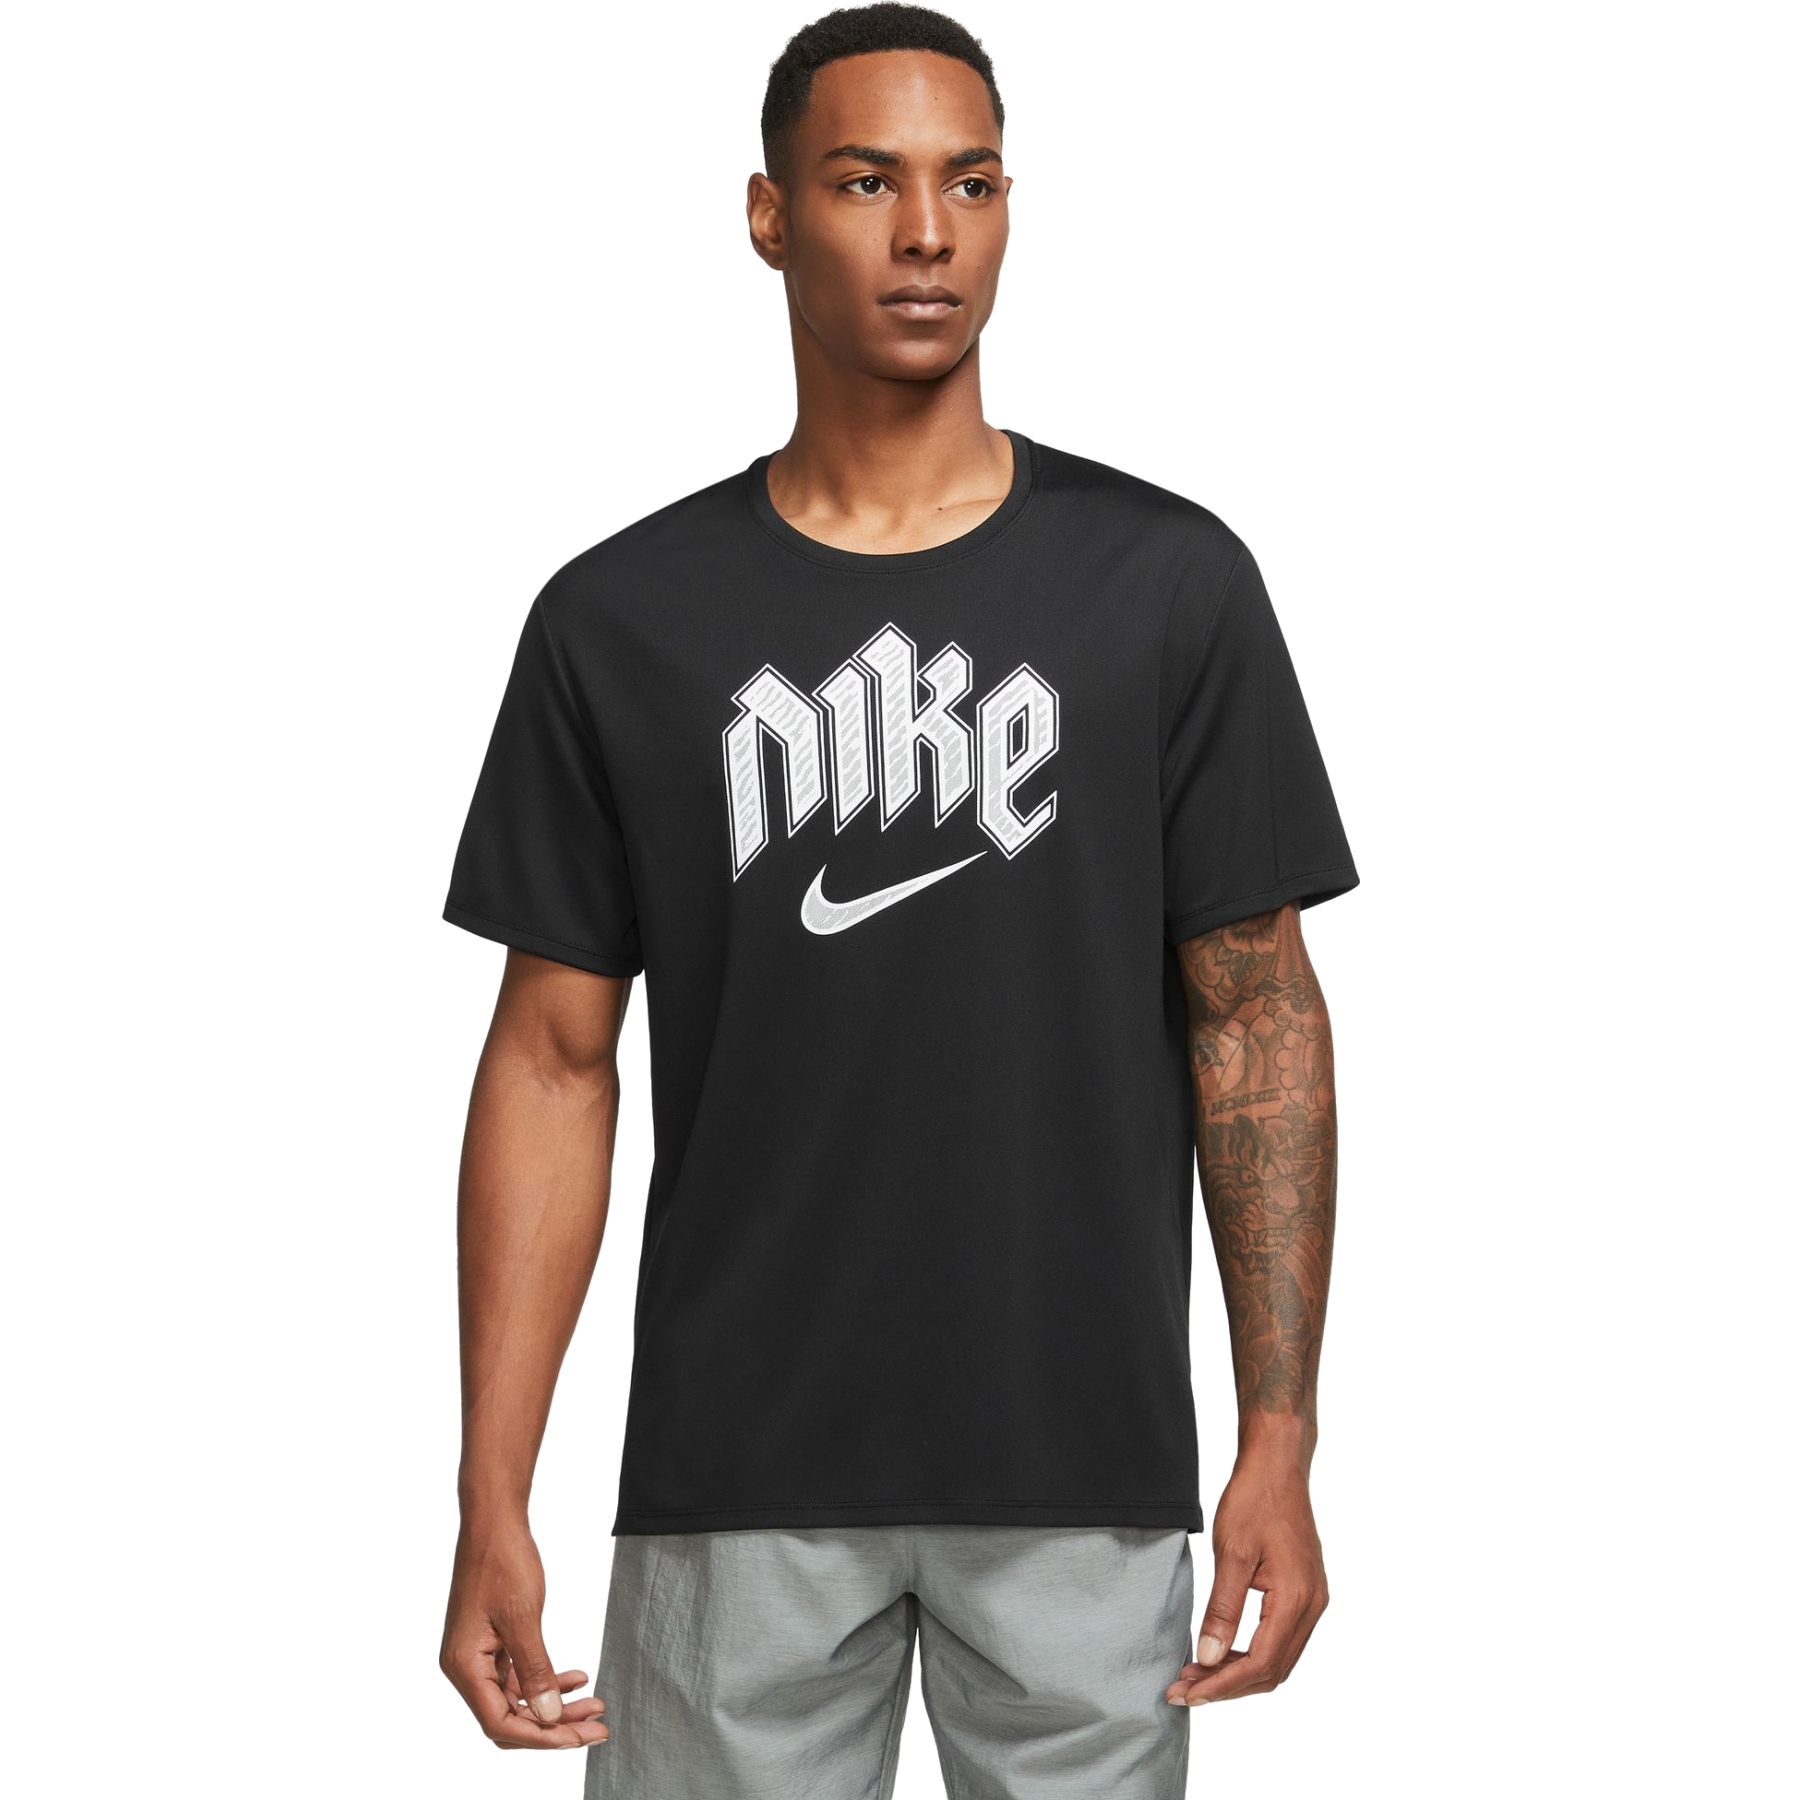 Nike Dri-Fit Run Division Short Sleeve Jersey Black